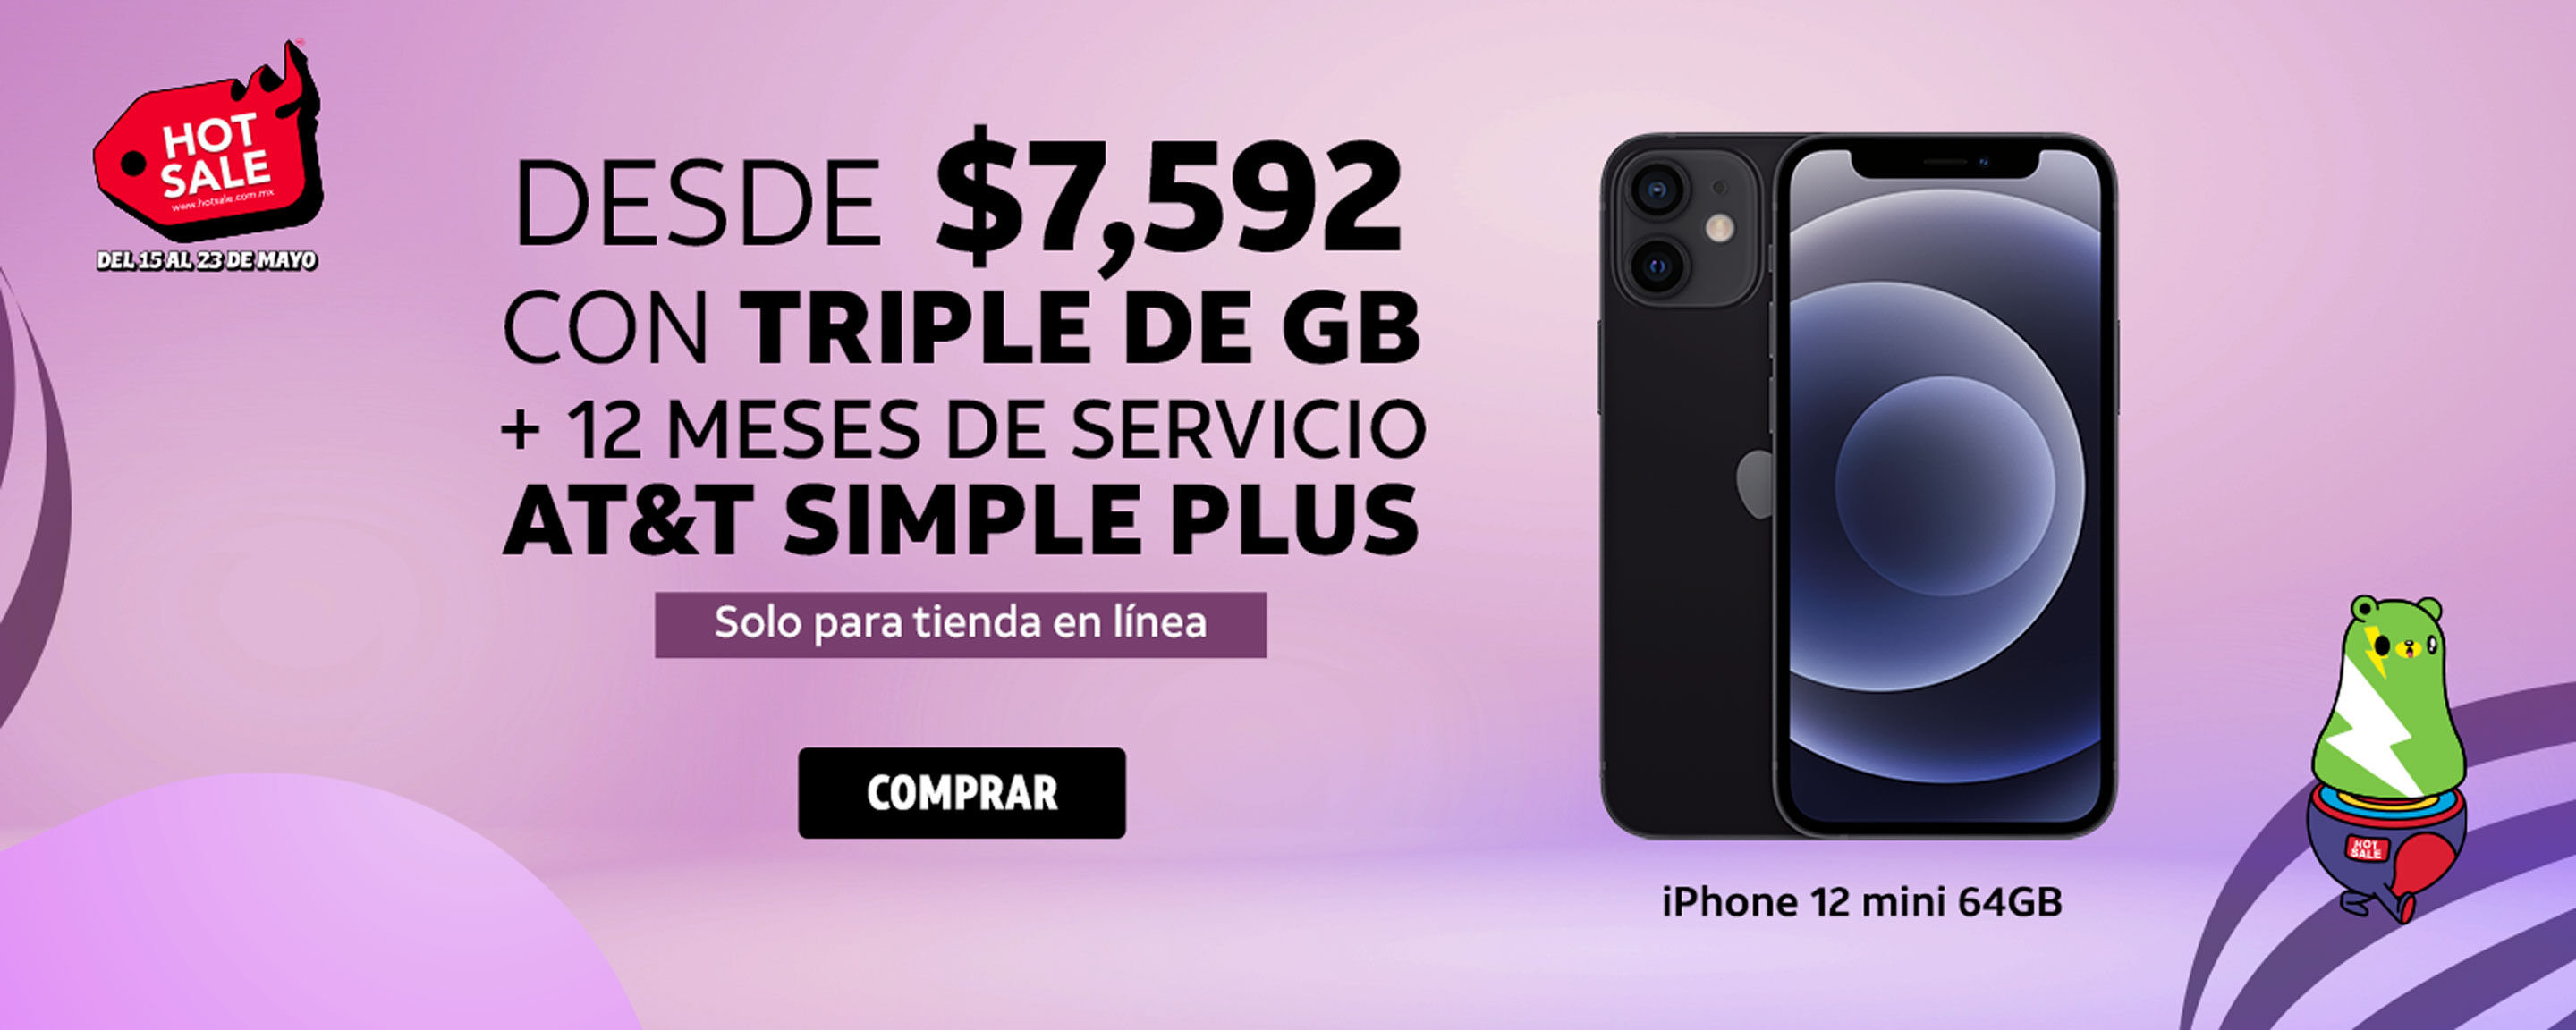 iPhone 12 Mini 64GB DESDE $7,592 CON TRIPLE DE GB + 12 MESES DE SERVICIO AT&T SIMPLE PLUS